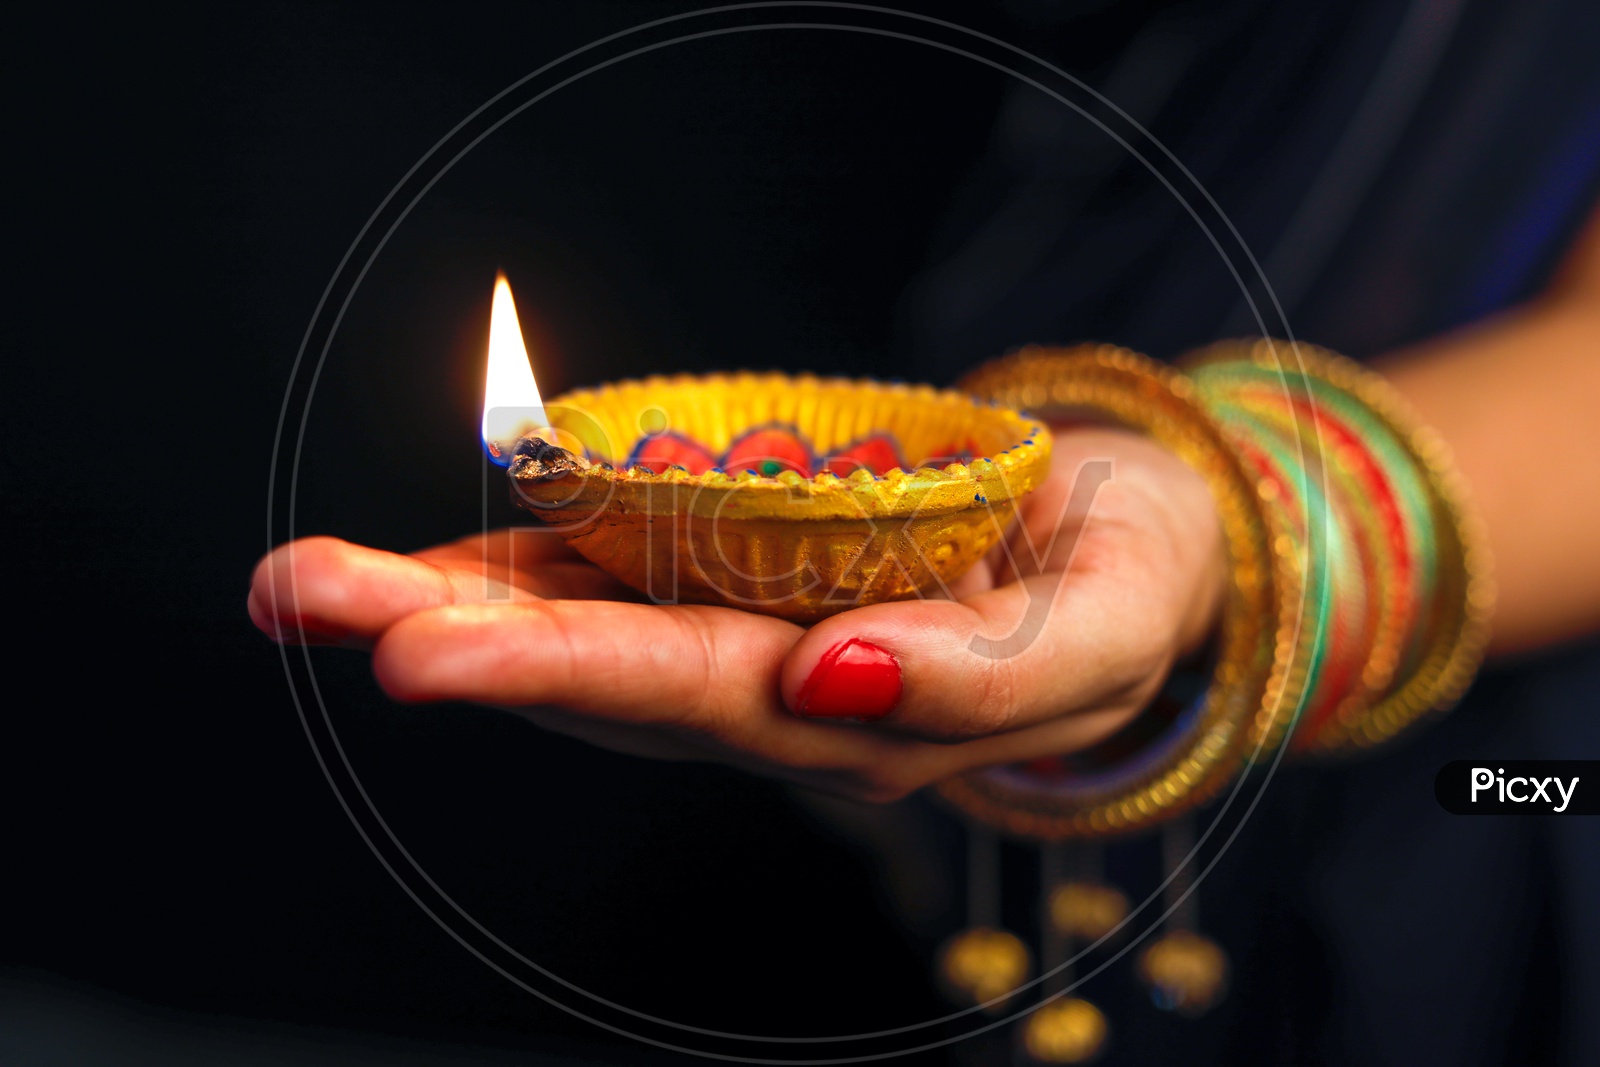 Indian Festival Diwali, Diwali Lamp in Hand